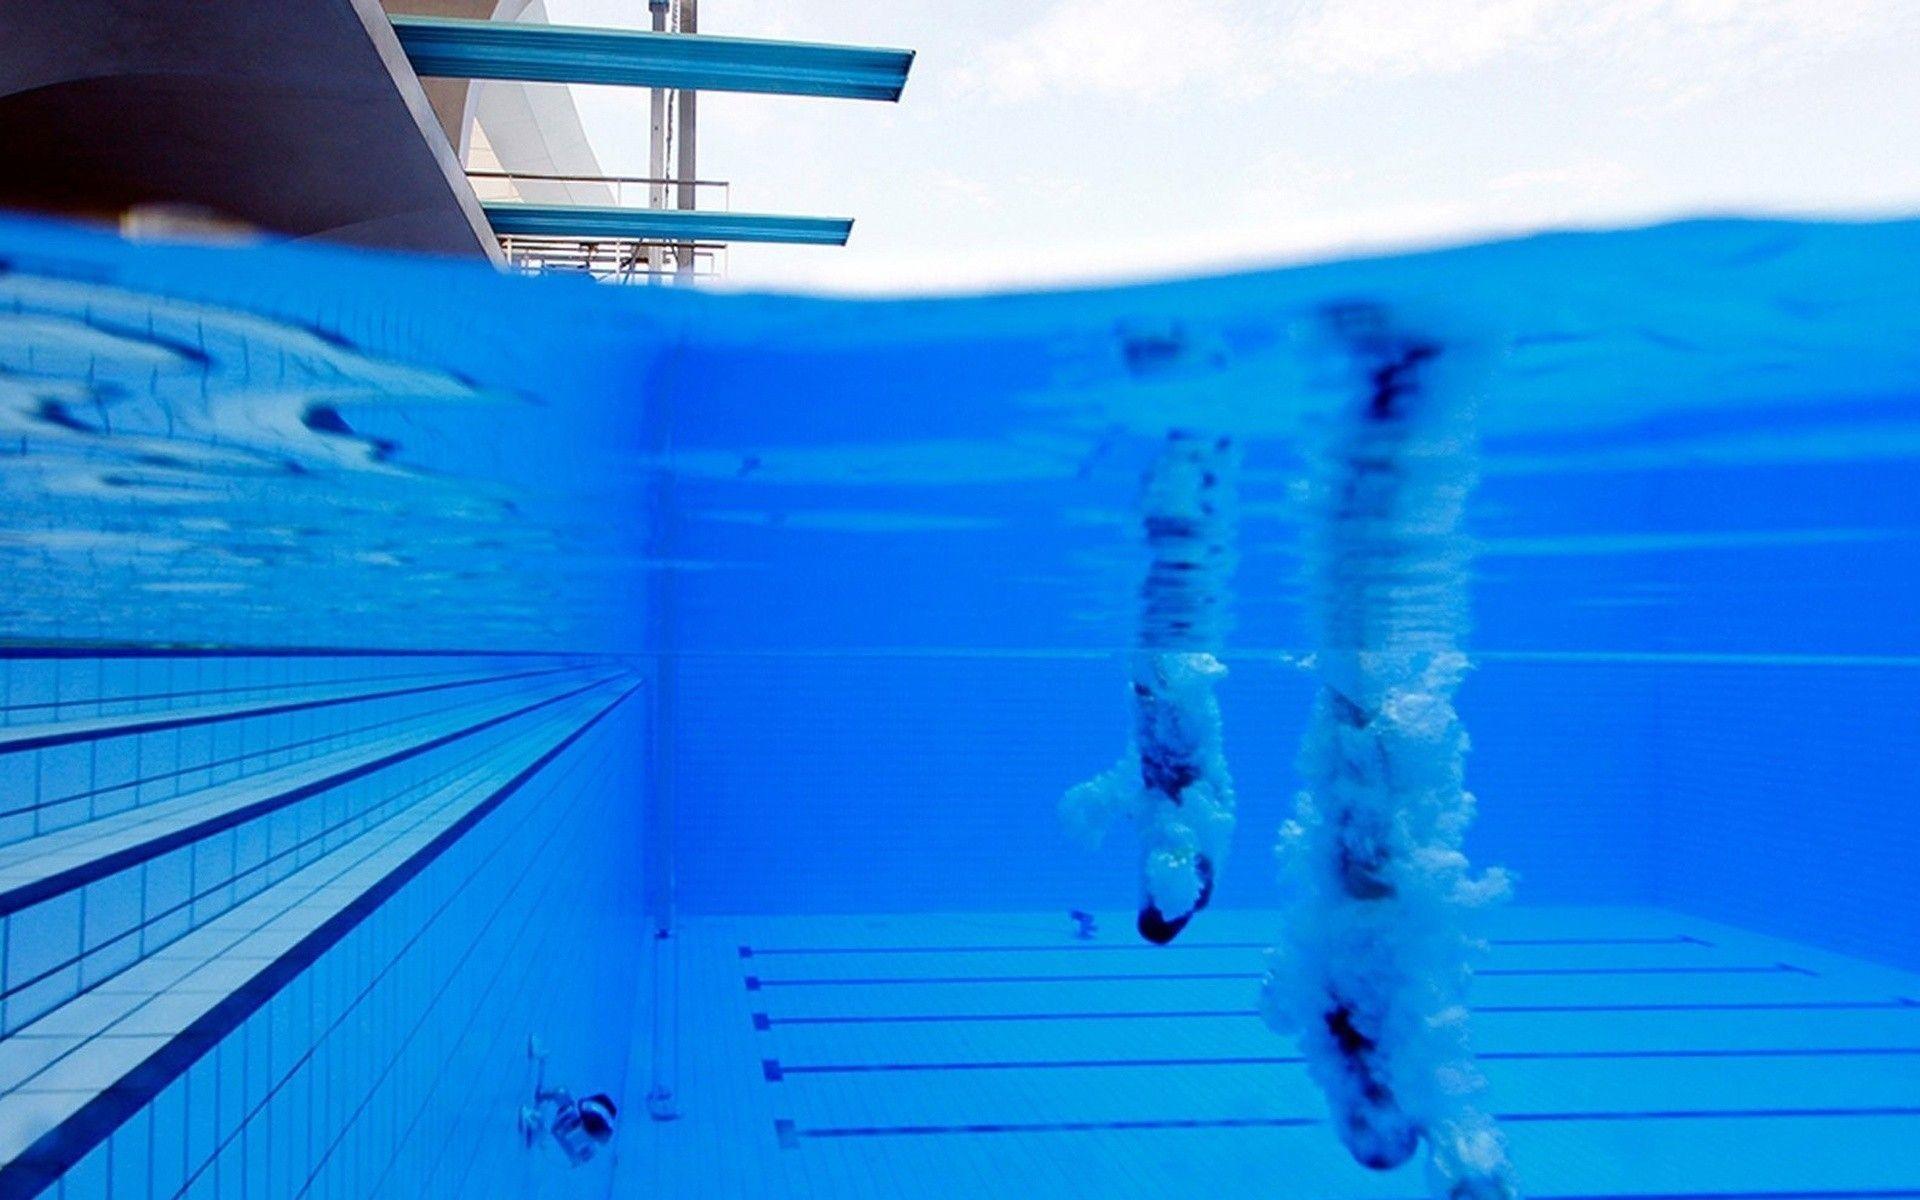 Diver swimming pools wallpaper. PC